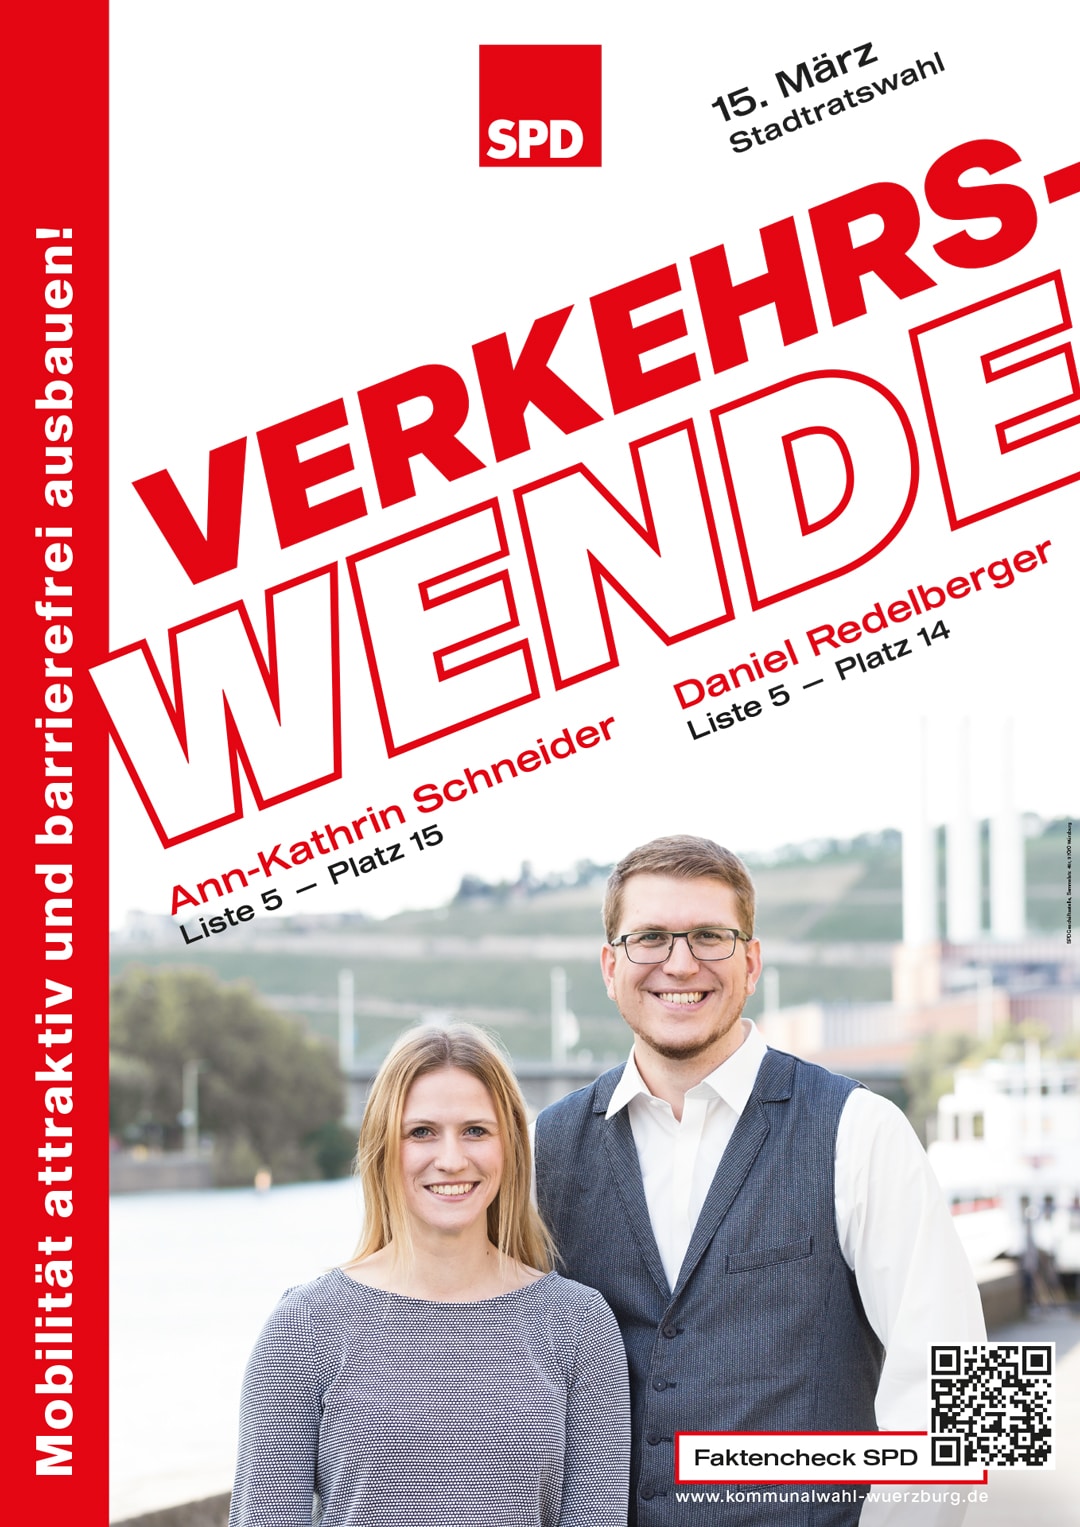 SPD Würzburg Kommunalwahl-Kampagne Design Wahlplakat Verkehrswende